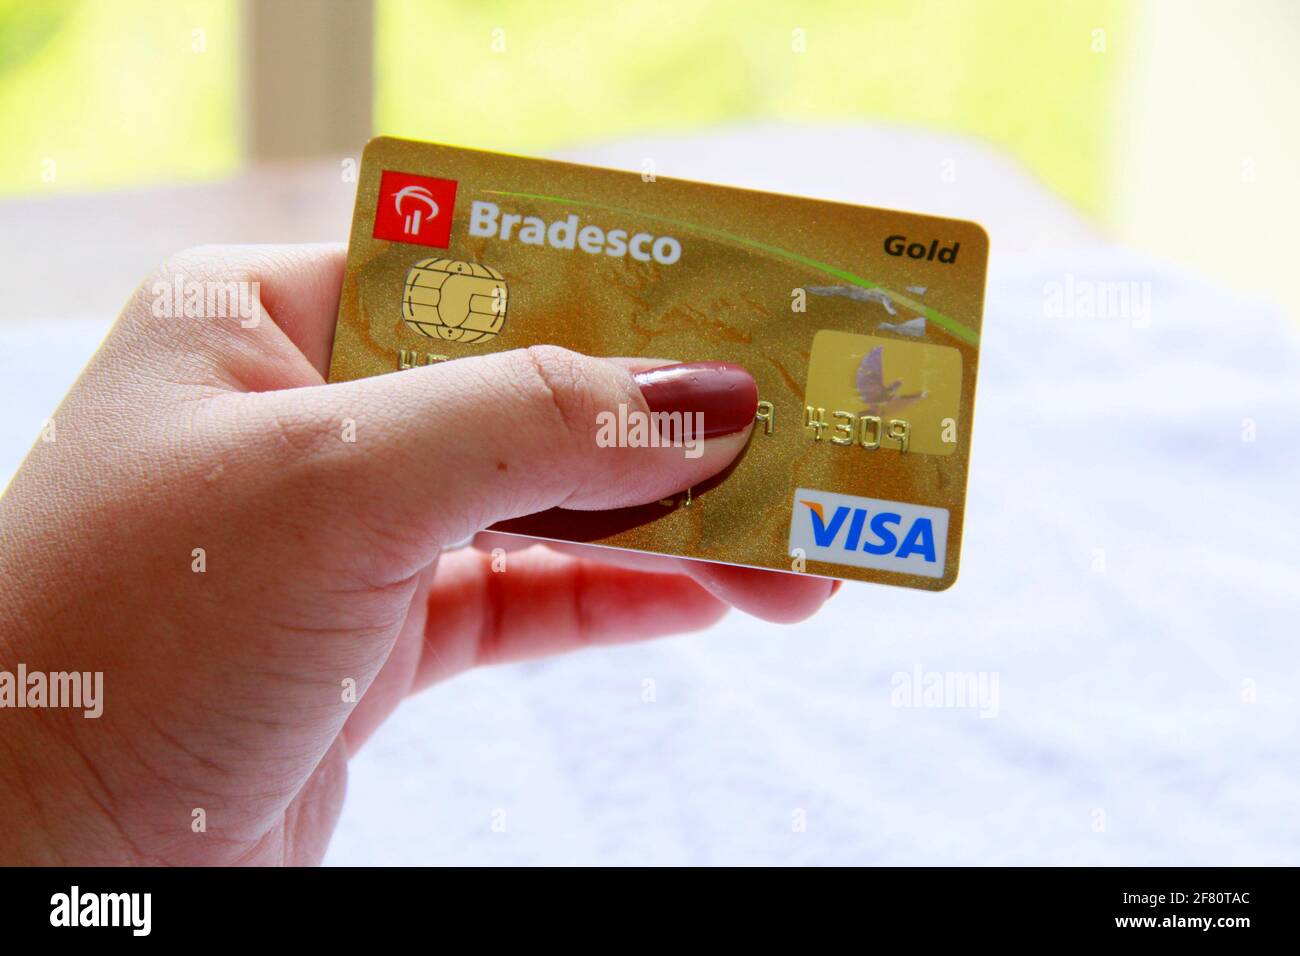 salvador, bahia / brésil - 10 novembre 2013: Femme tenant main Bradesco  carte de crédit Visa. *** Légende locale *** Photo Stock - Alamy